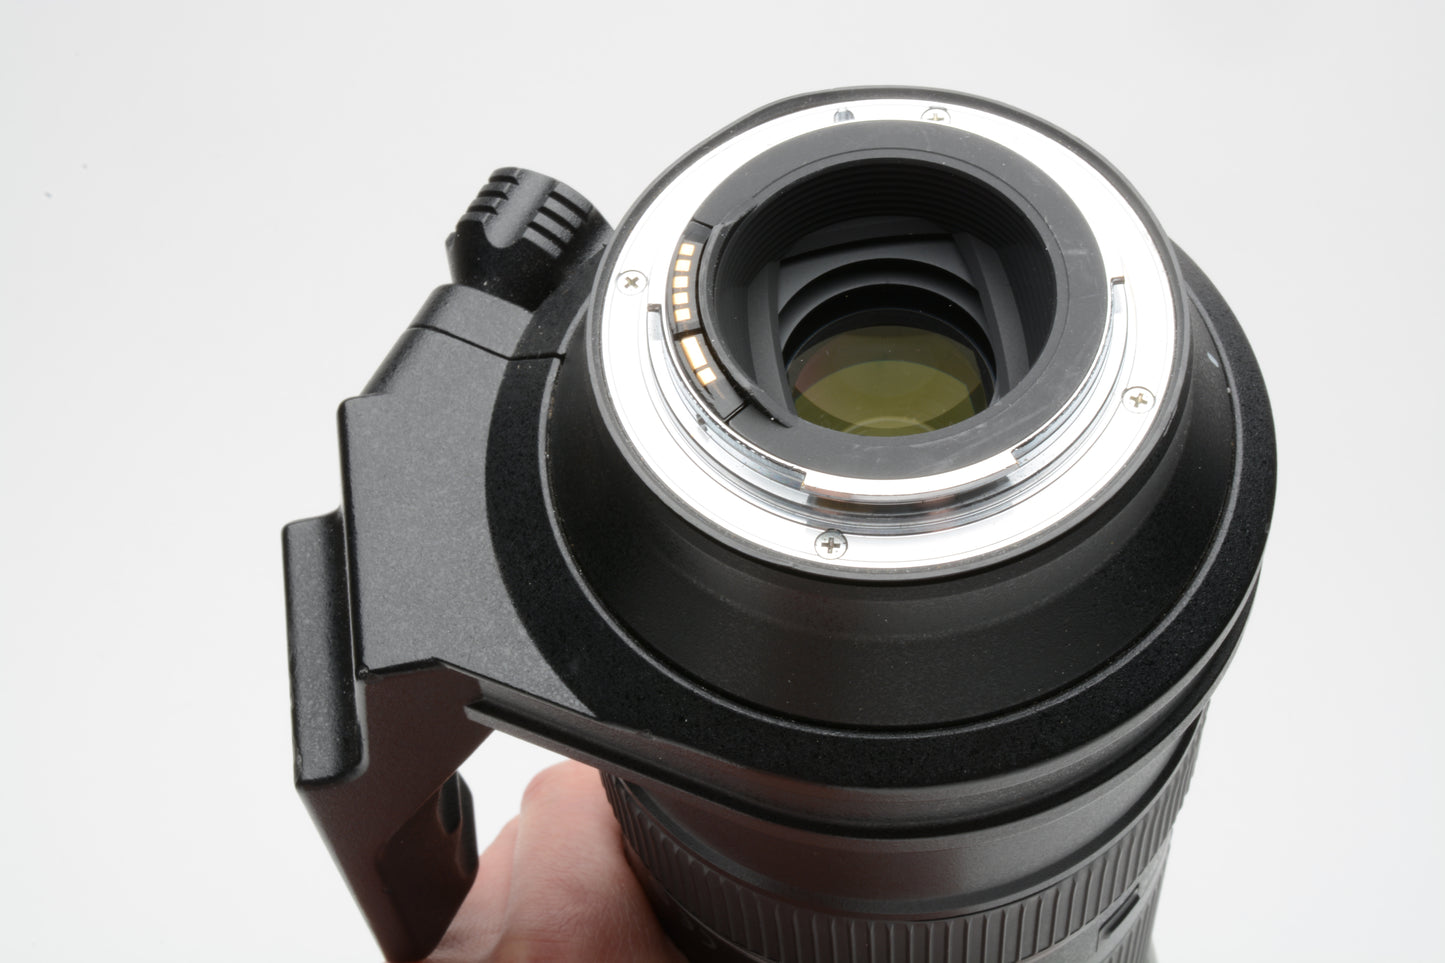 Tamron SP 150-600mm f/5-6.3 USD Di VC Telephoto, Canon EF, w/Hood, Caps, Collar